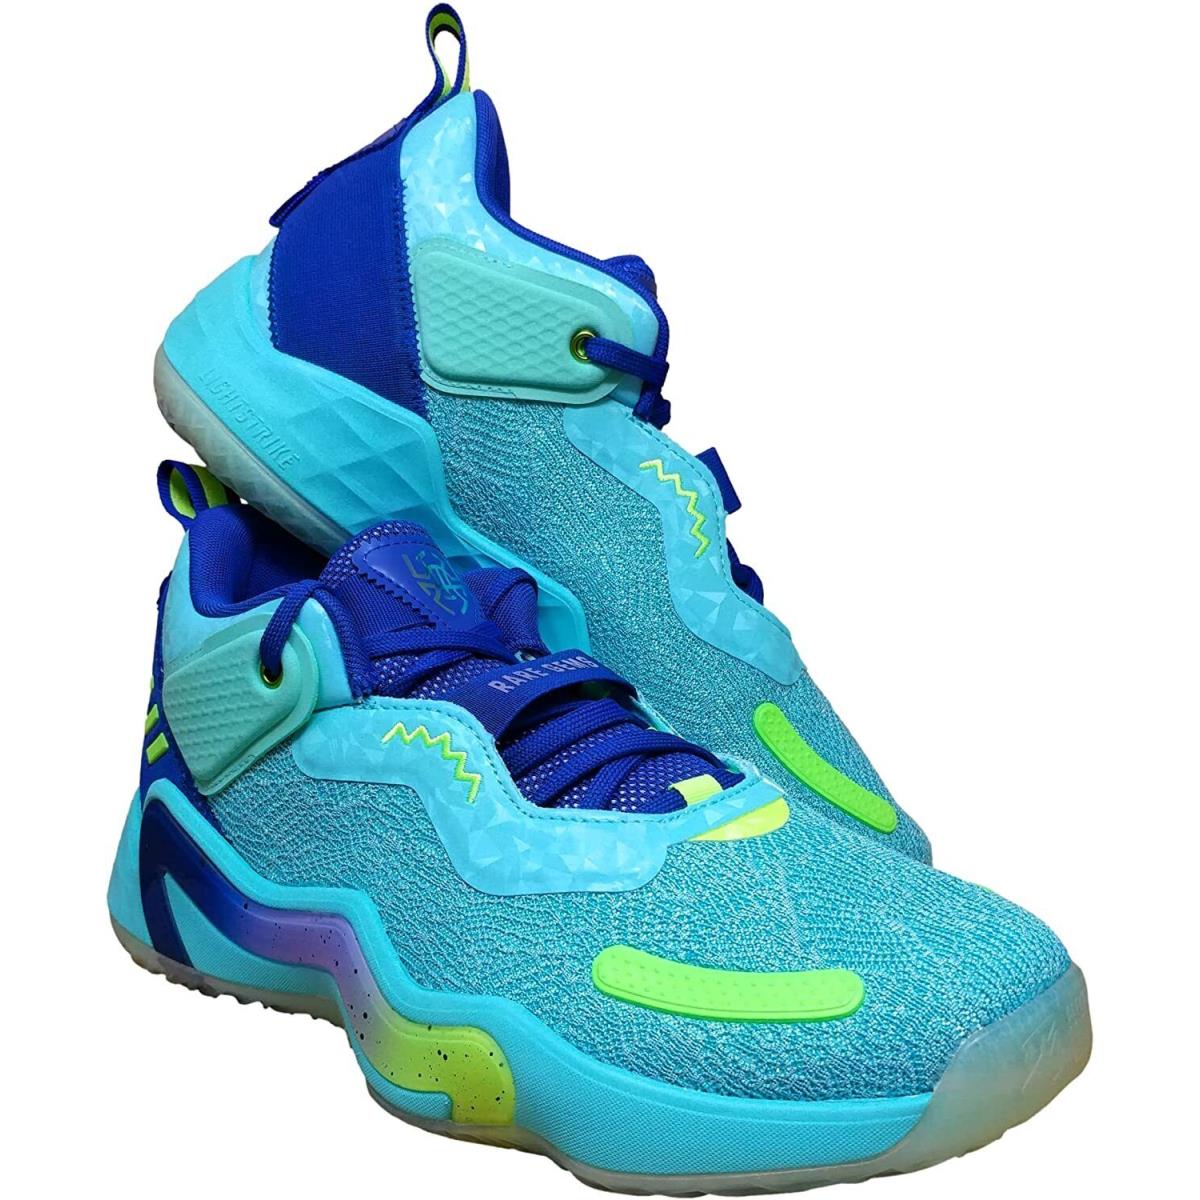 Gems Adidas D.o.n. Issue 3 Donovan Mitchell Mens Basketball Shoes Sz 7-10.5 - Blue